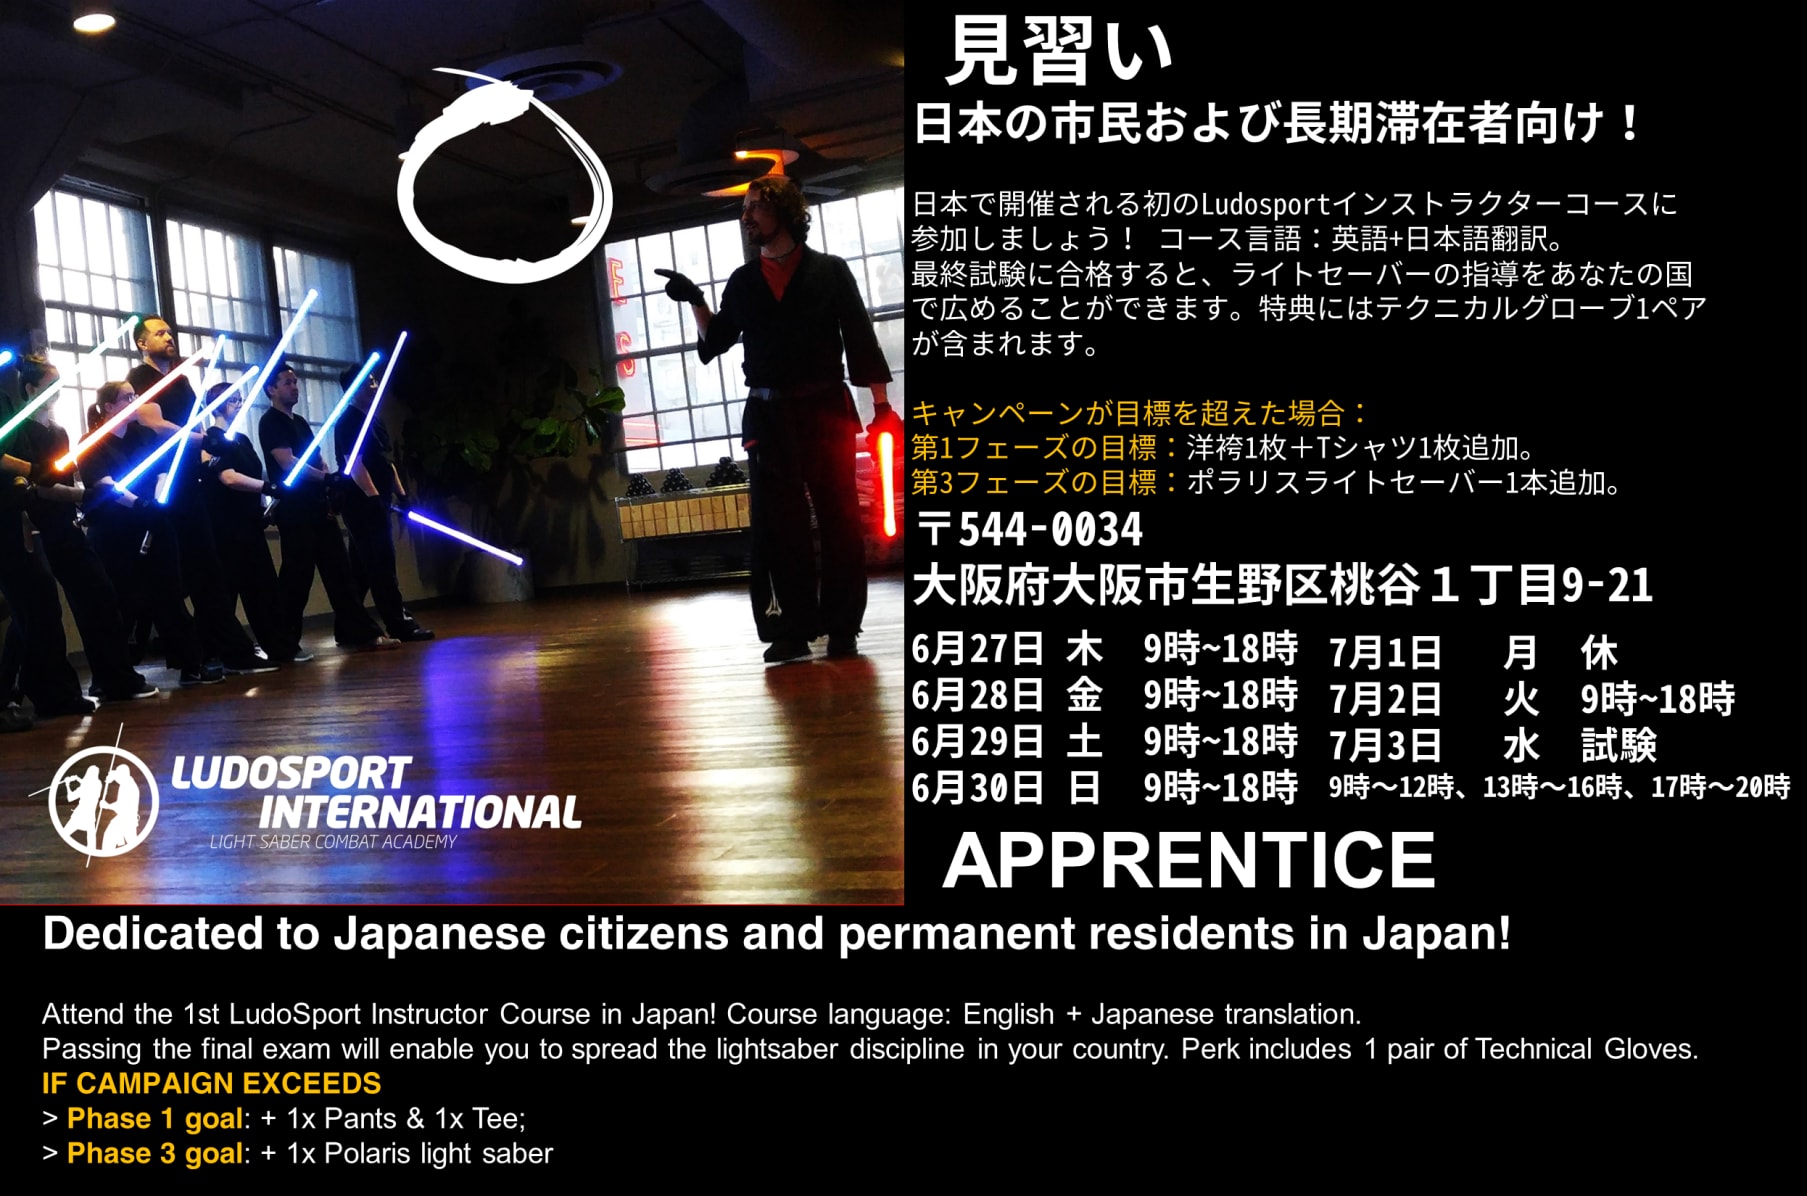 LudoSport lightsaber Academy in Japan | Indiegogo